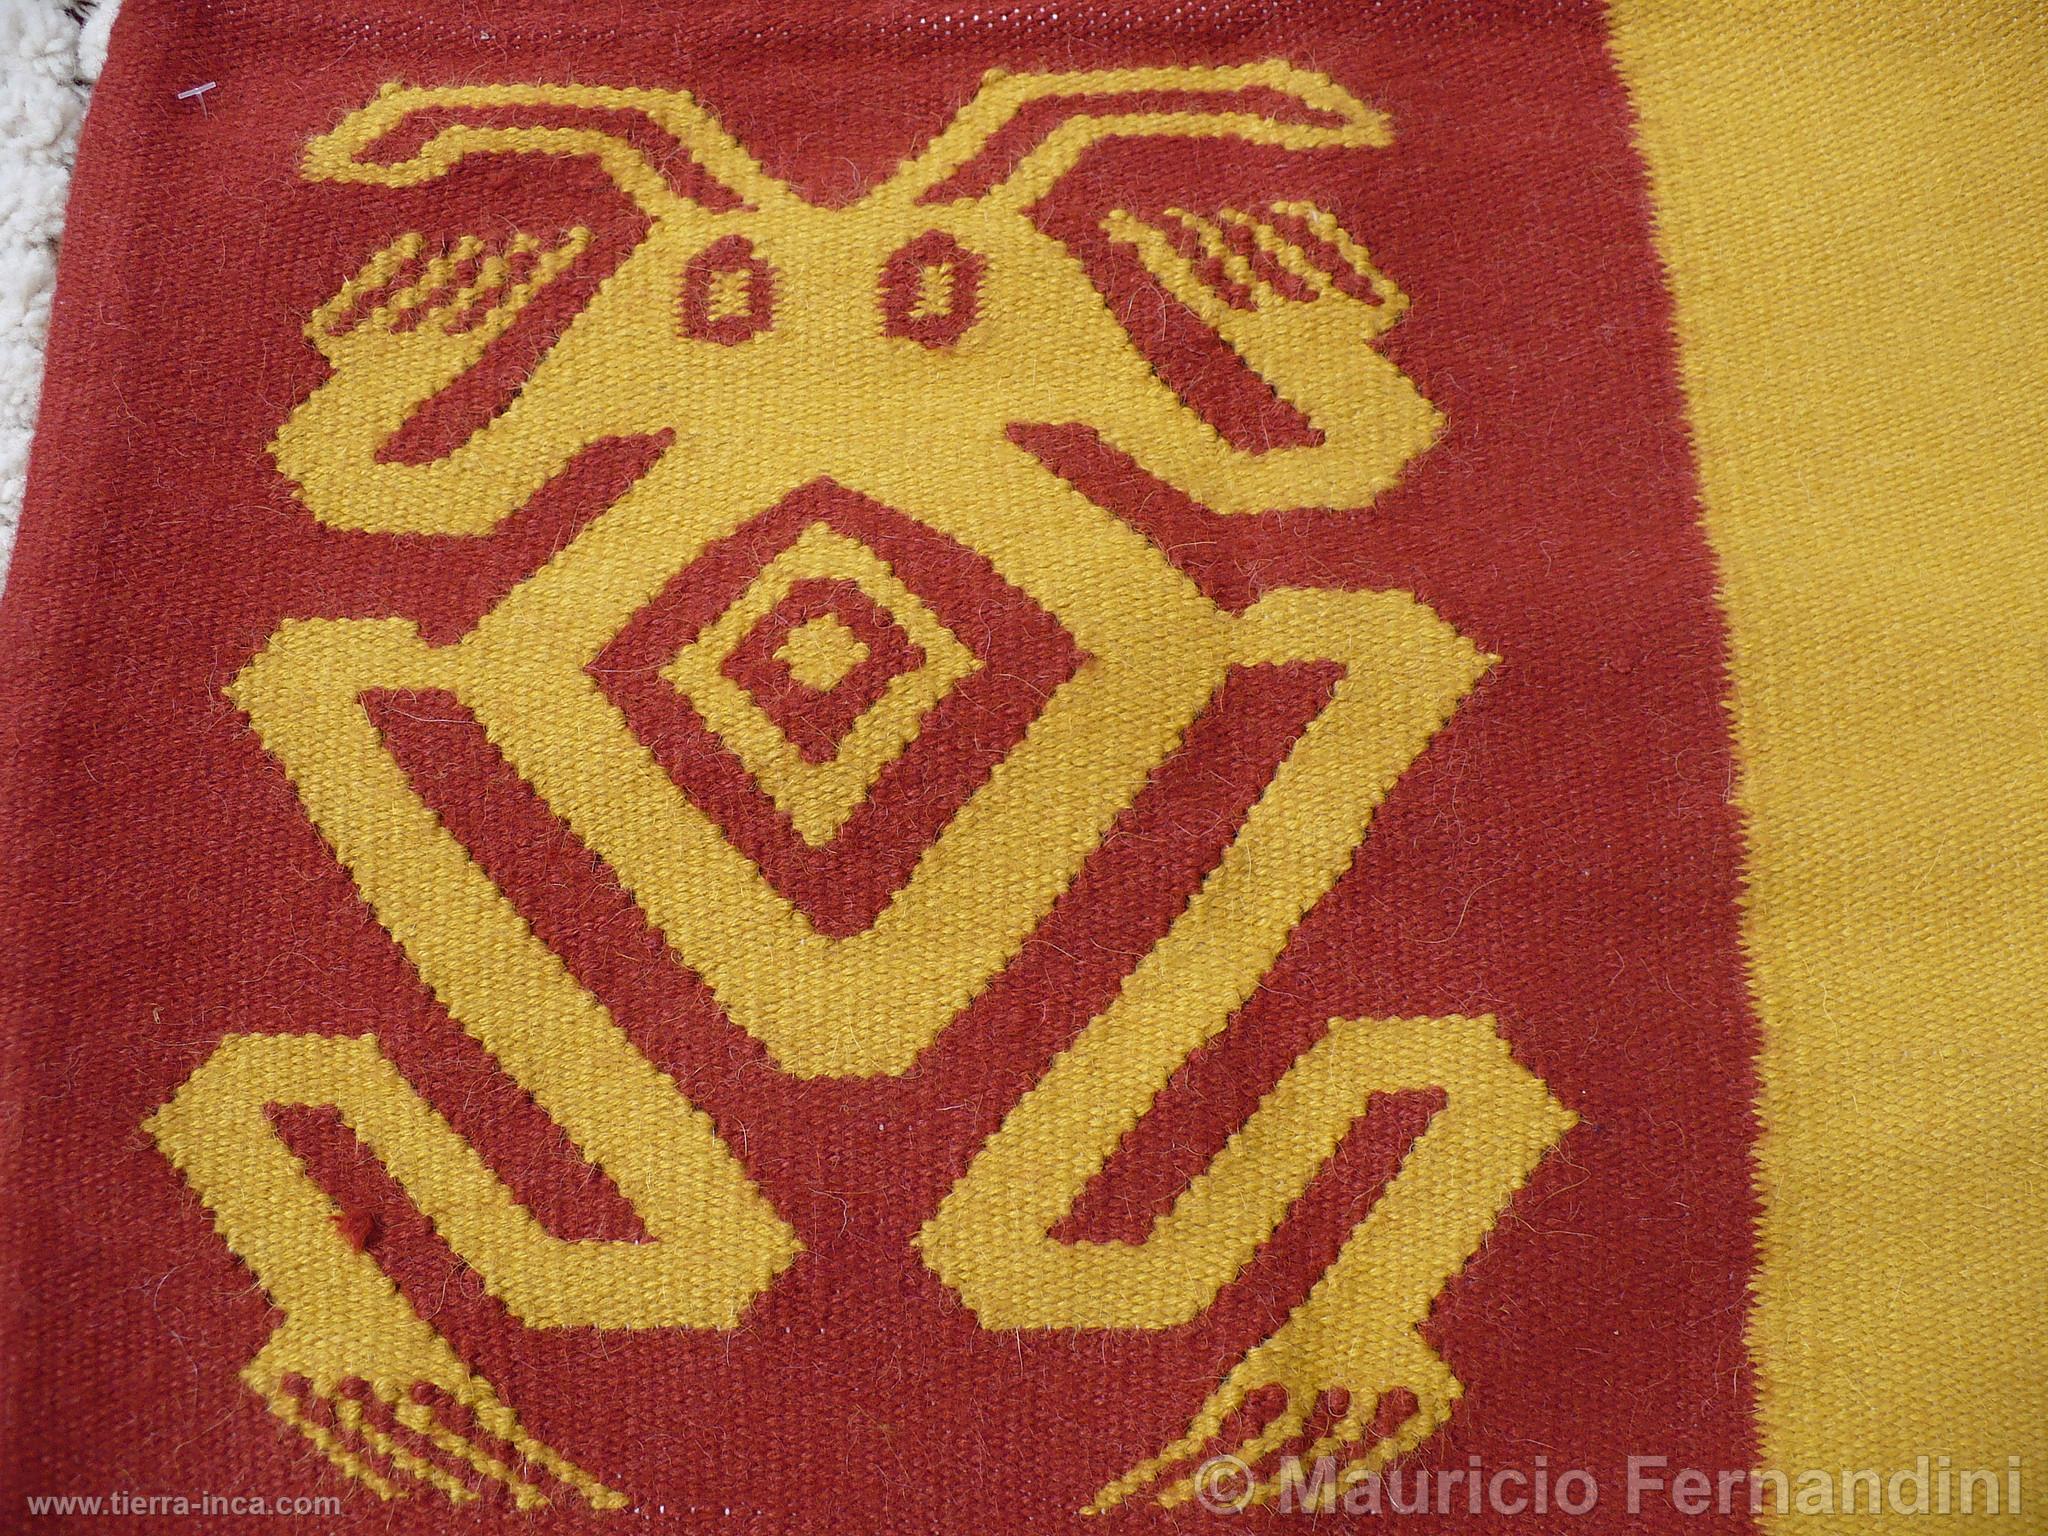 Textiles artesanales de Huancavelica